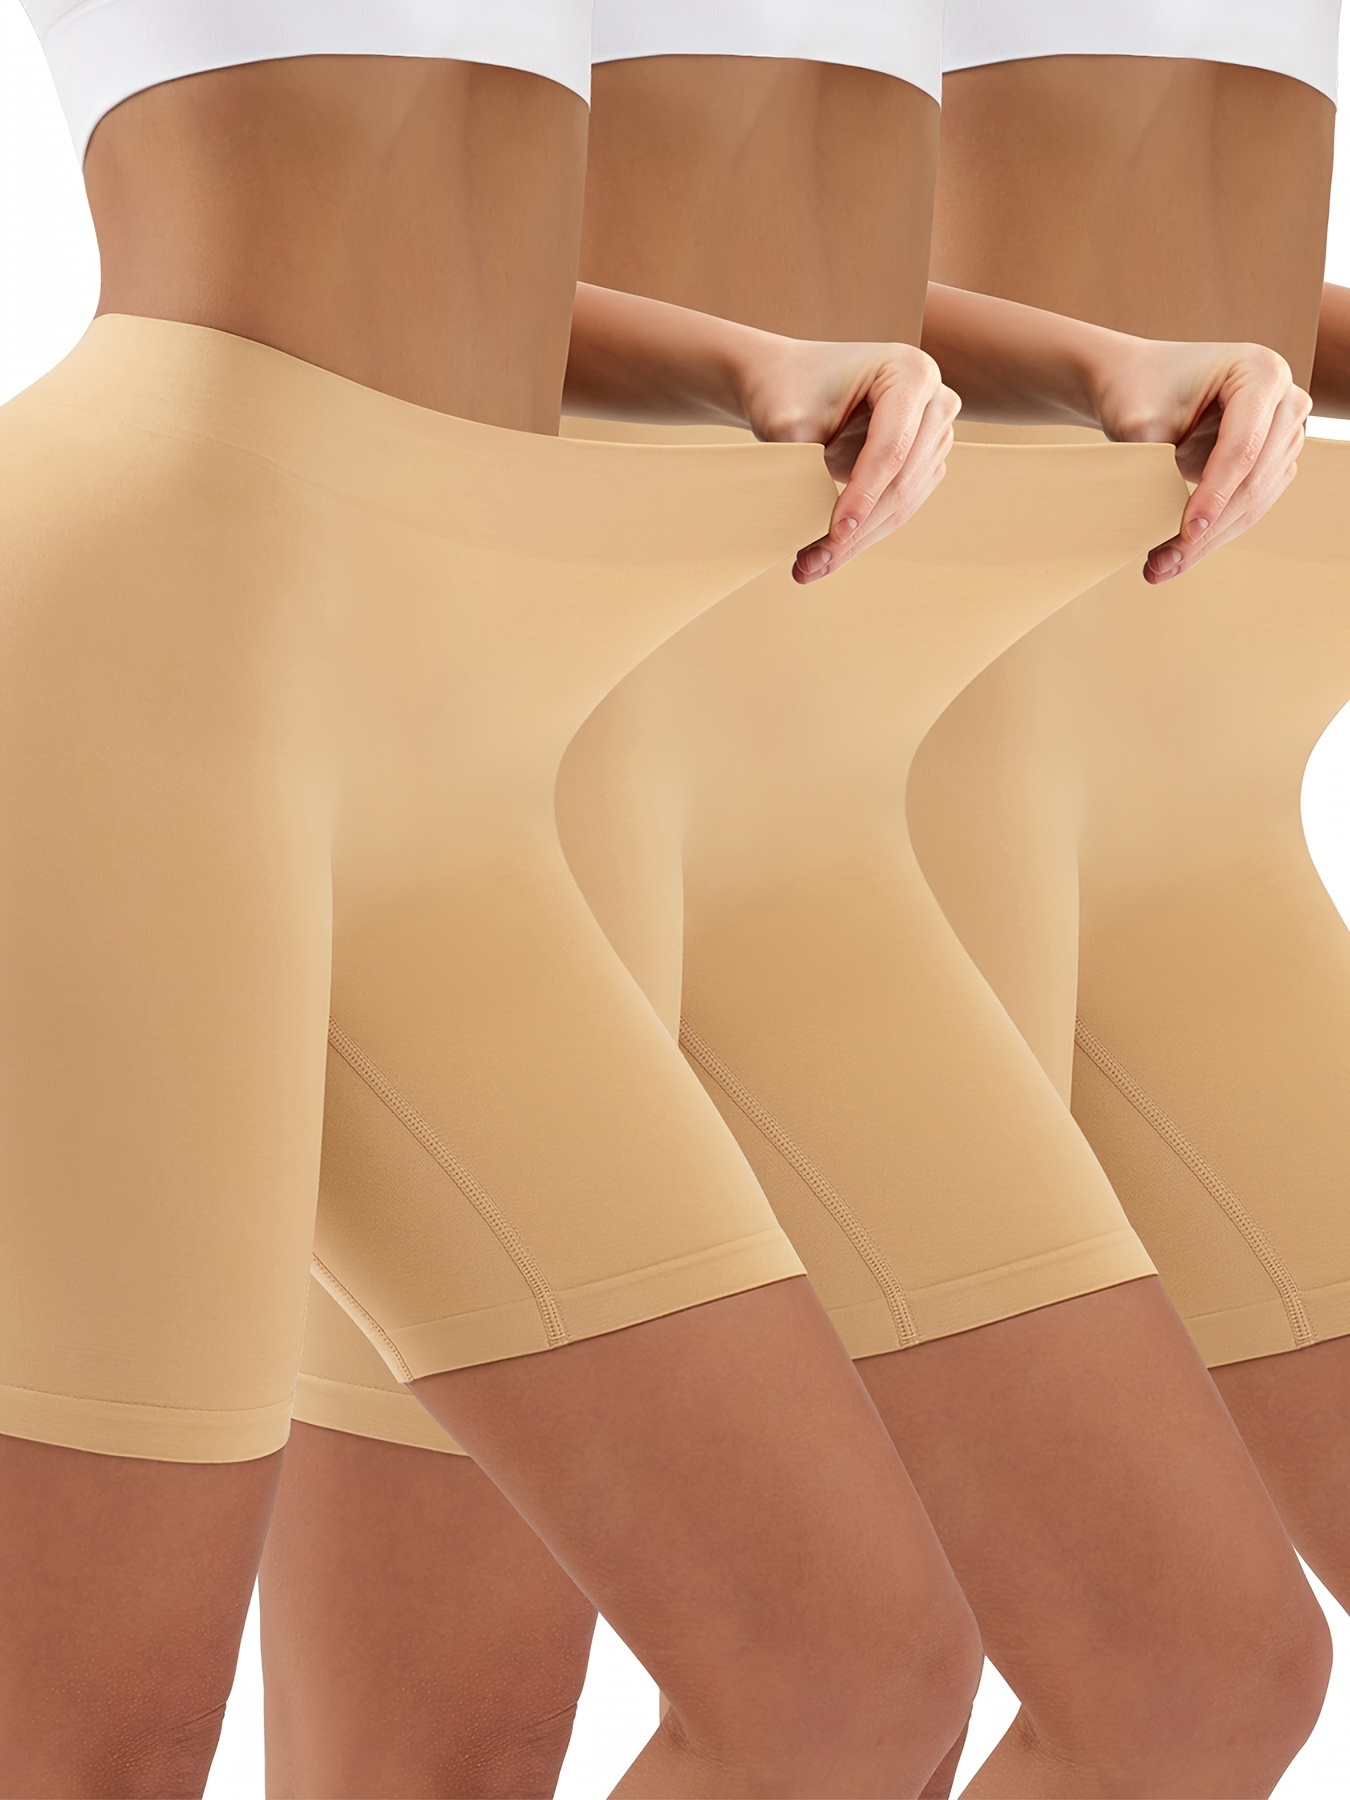 Ultra Slim Tummy Control Hip Lift Panties, Butt Lifting Tummy Control, High  Elastic Ice Silk Cooling Shapewear